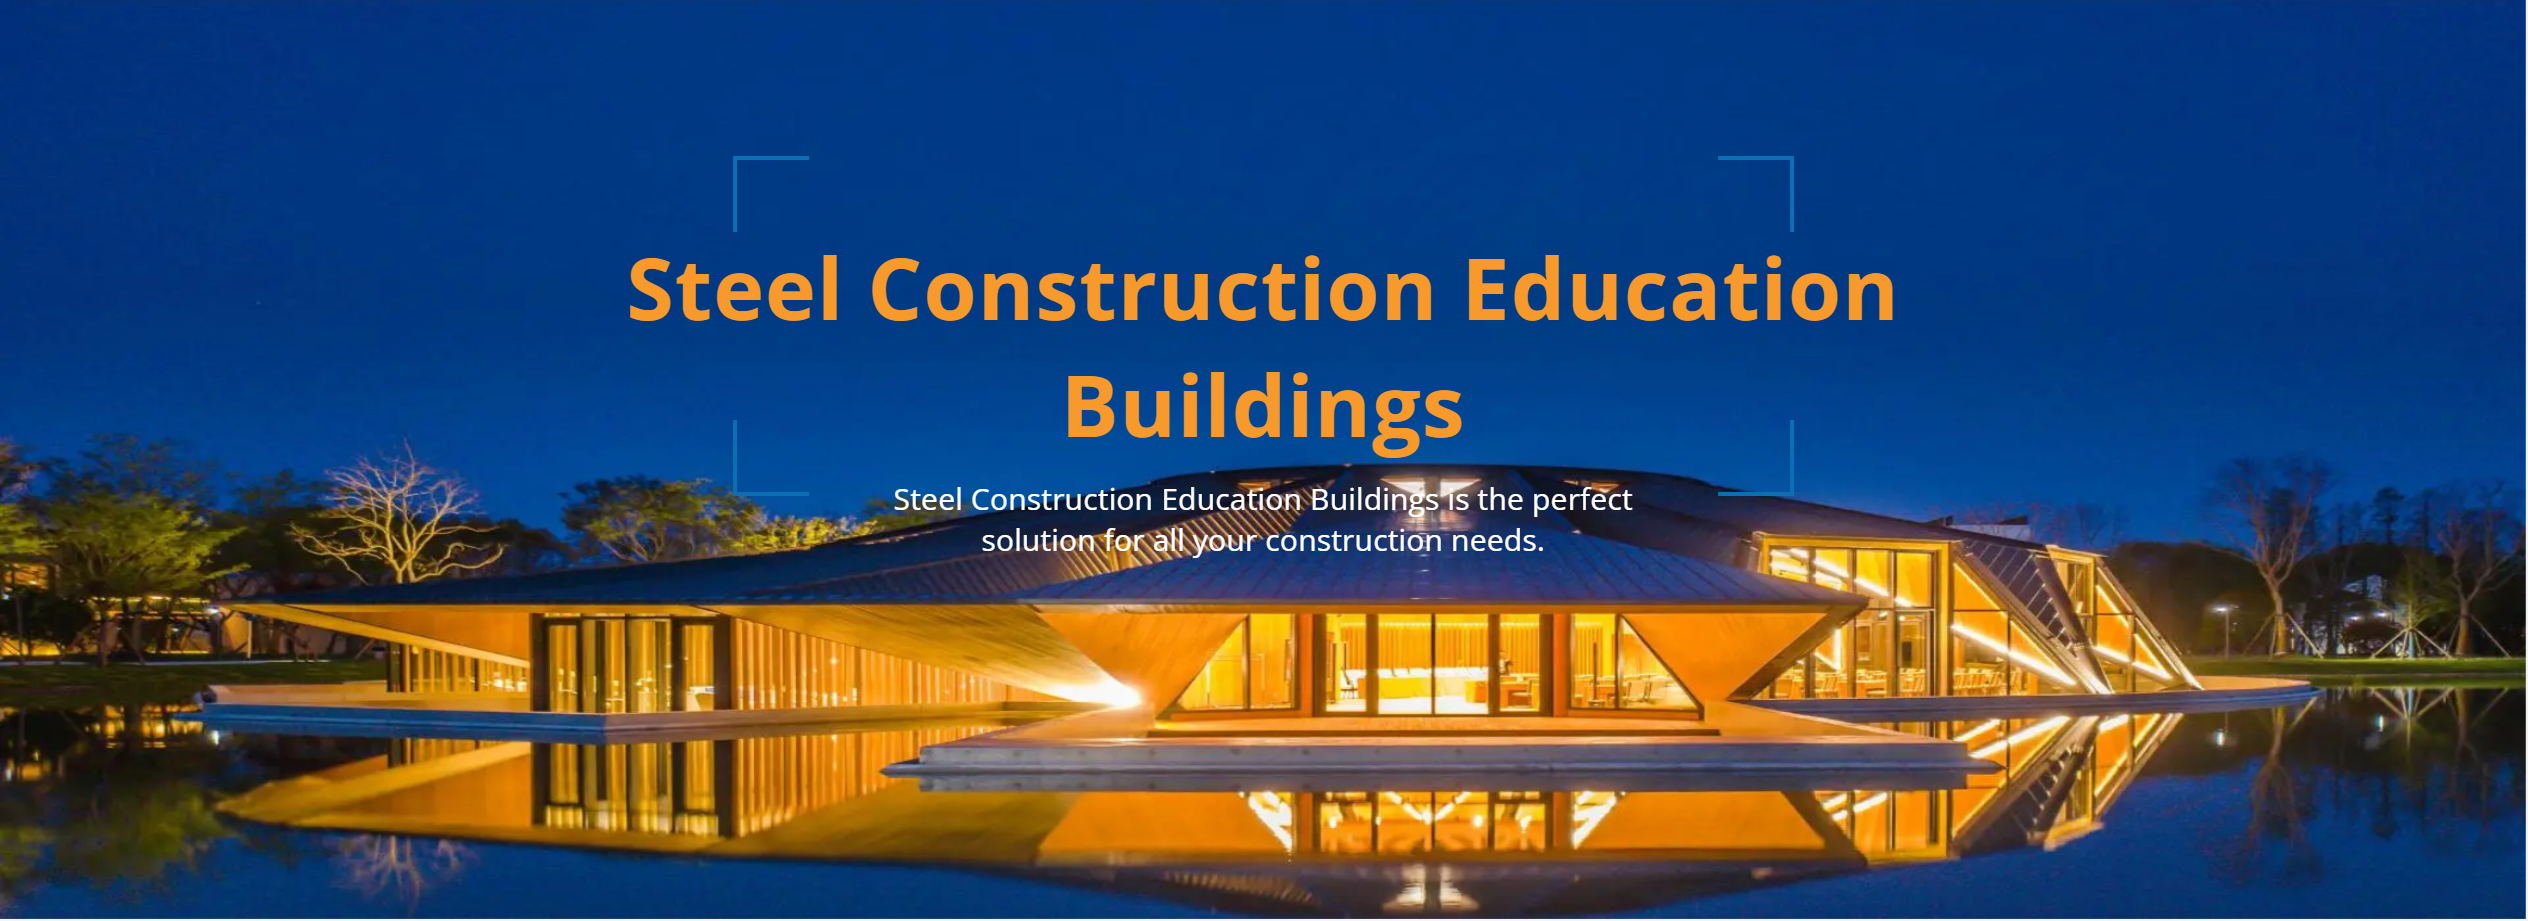 Steel-Construction-Education-Buildings-banner